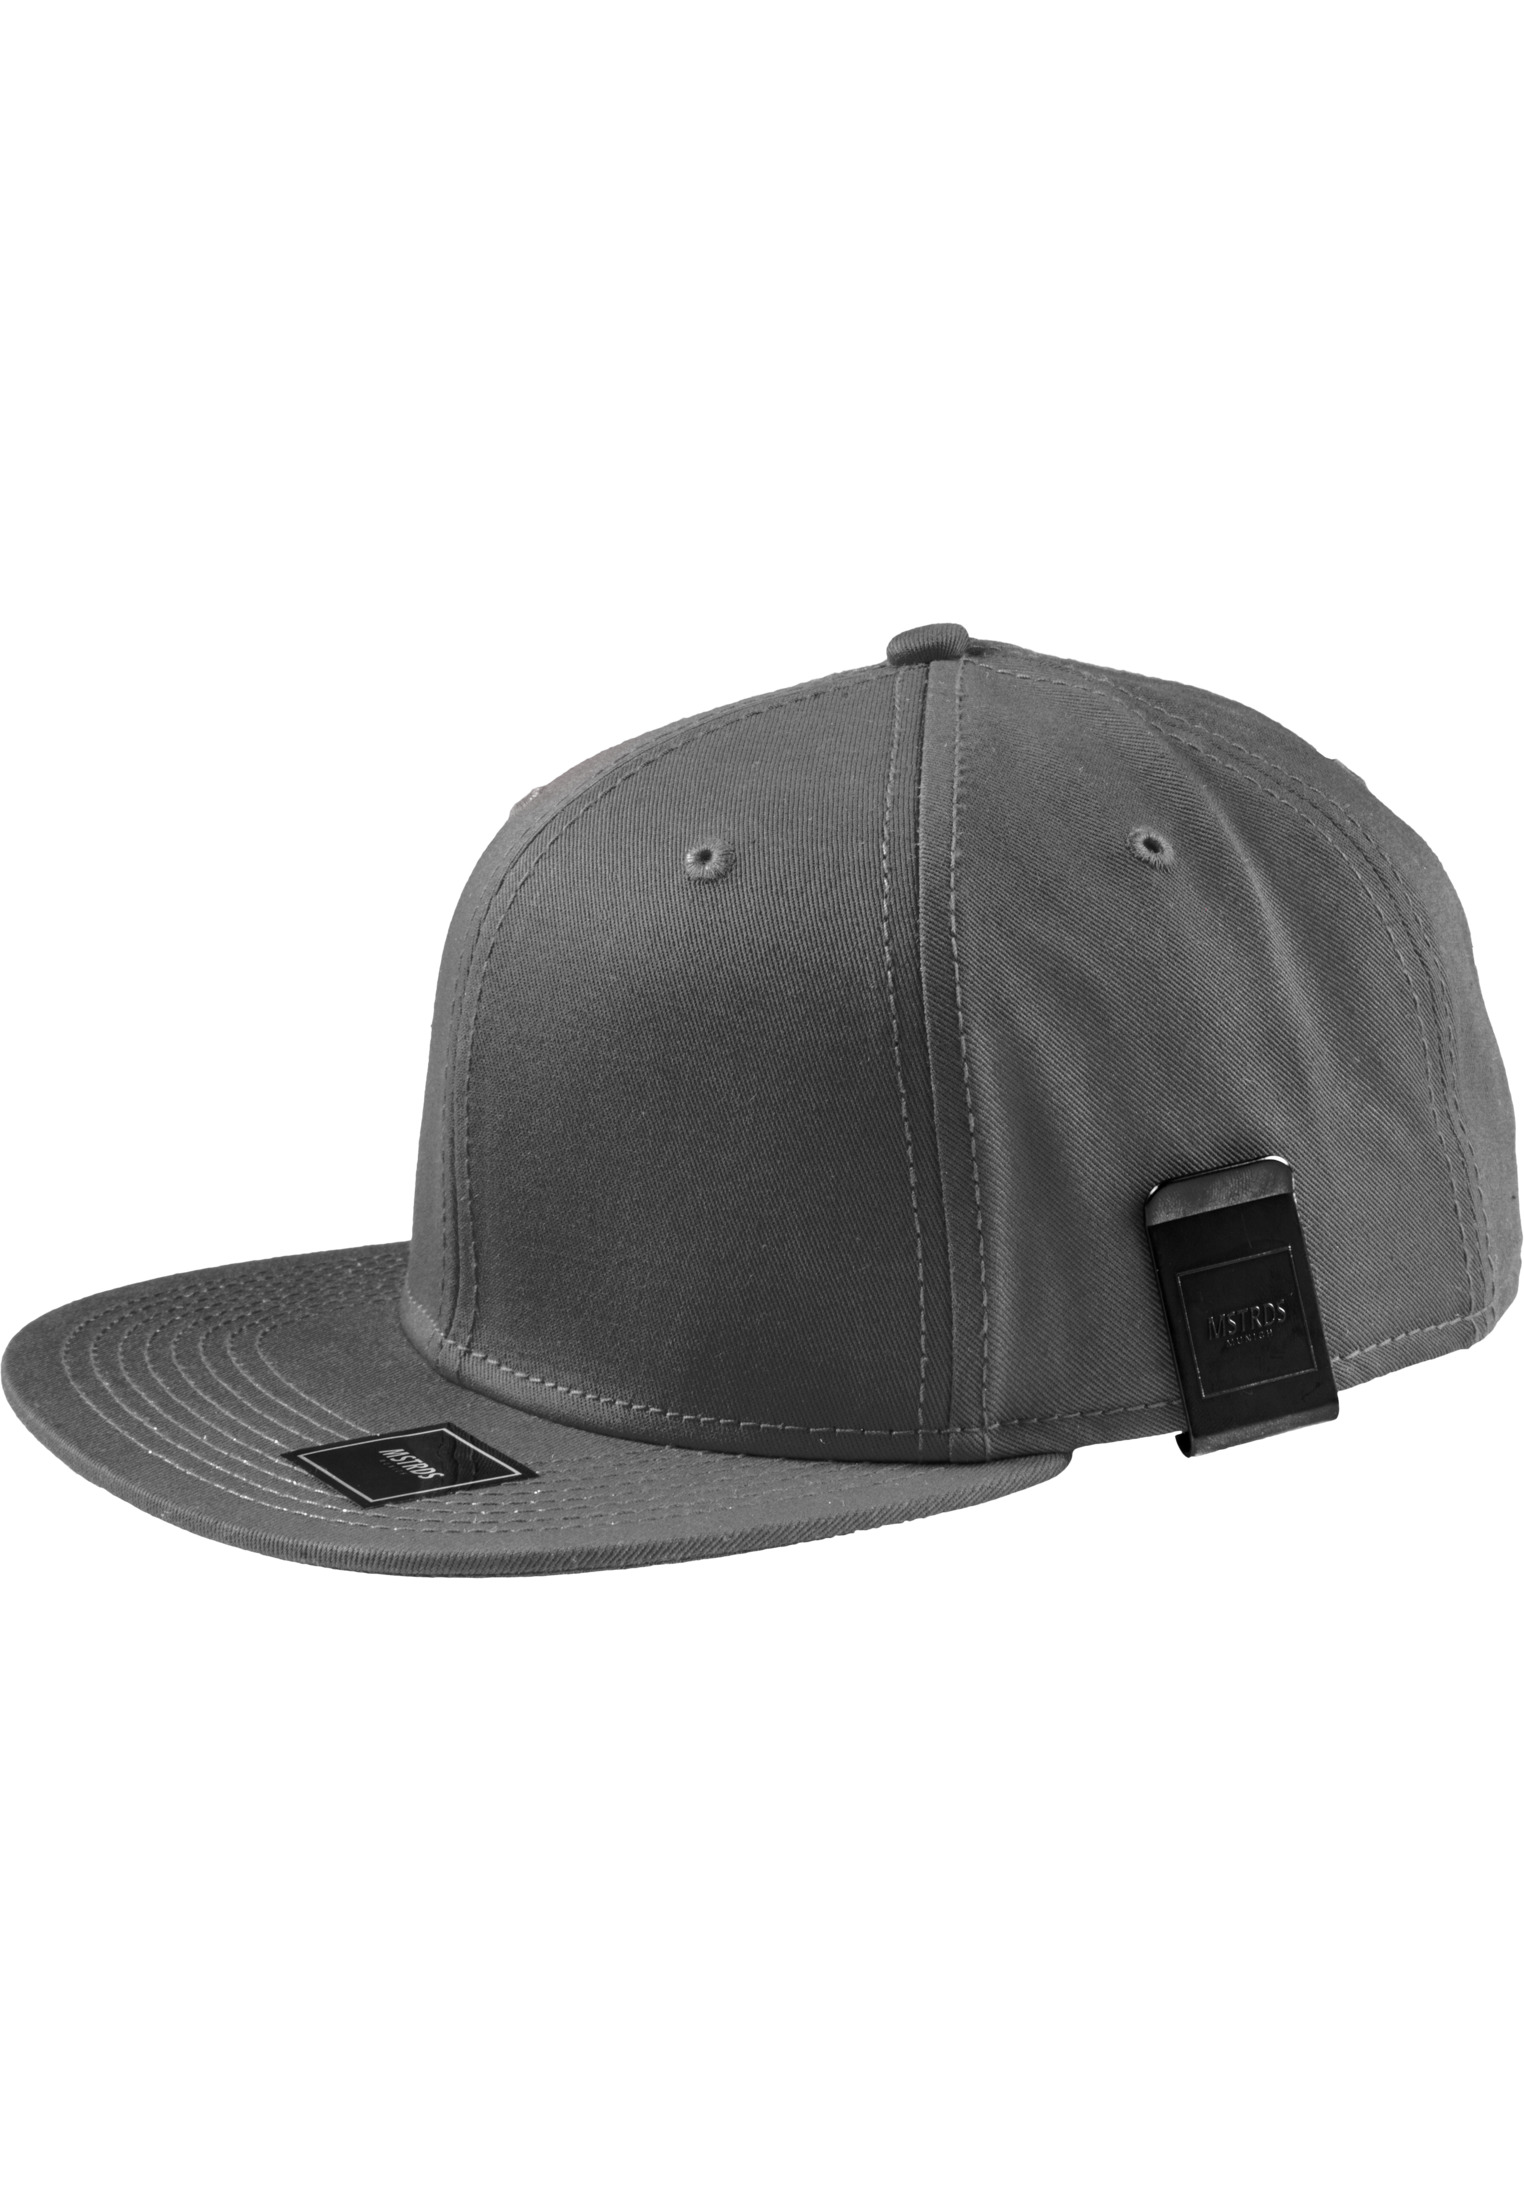 Mstrds Mens Cap Hat Cap Baseball Baseball Cap Trucker High Profile | eBay